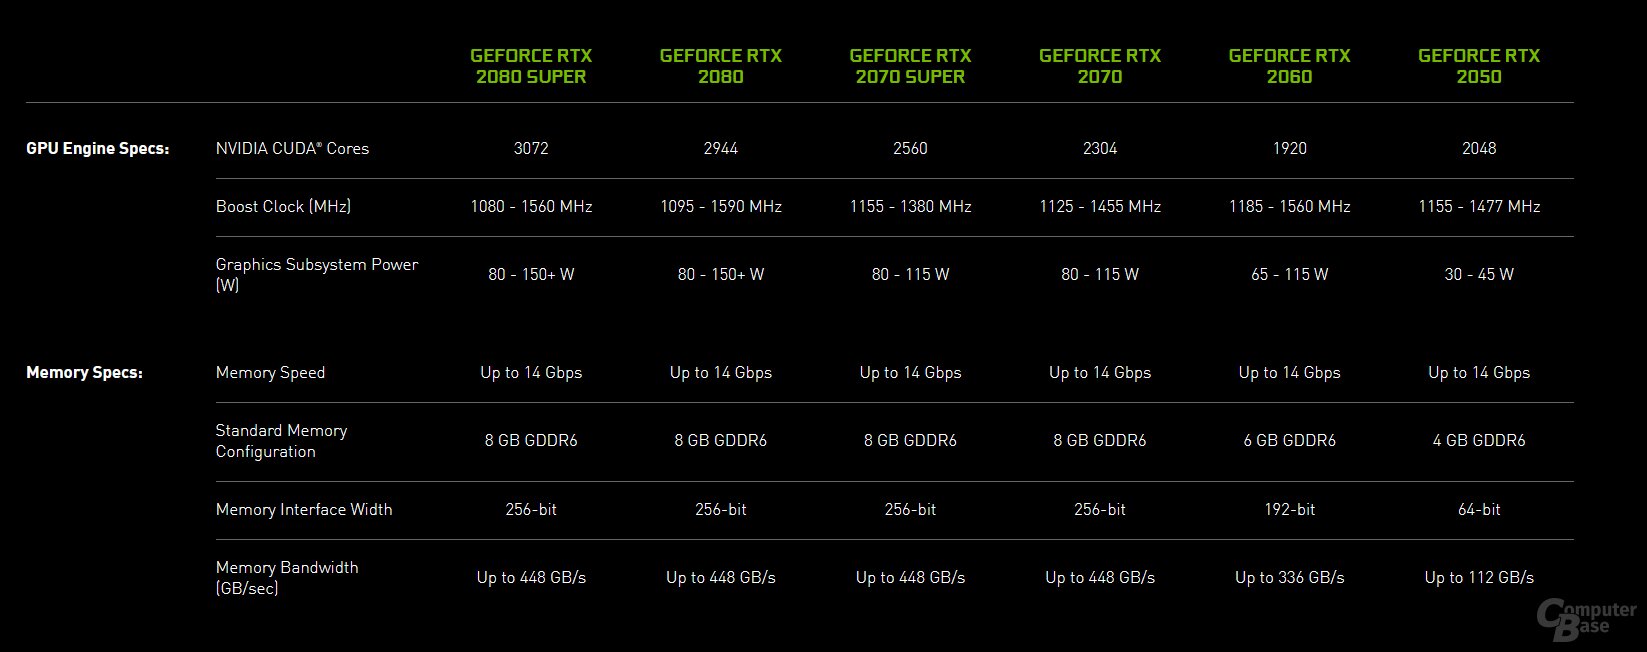 Mobile GeForce RTX 2000 inkl. 2050 im Detail